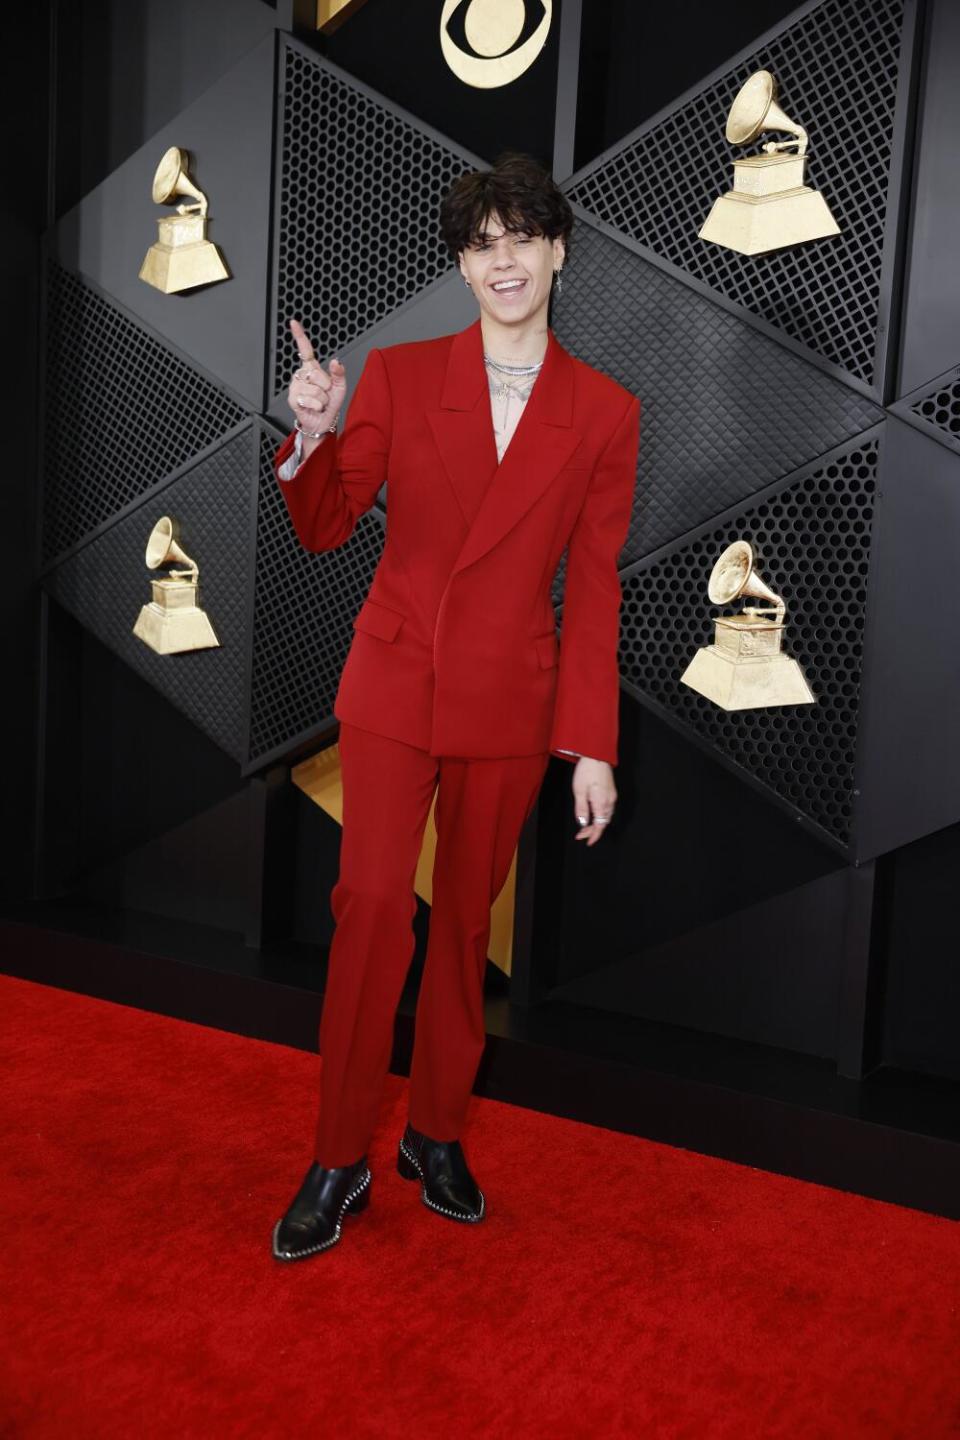 Landon Barker wears a red suit